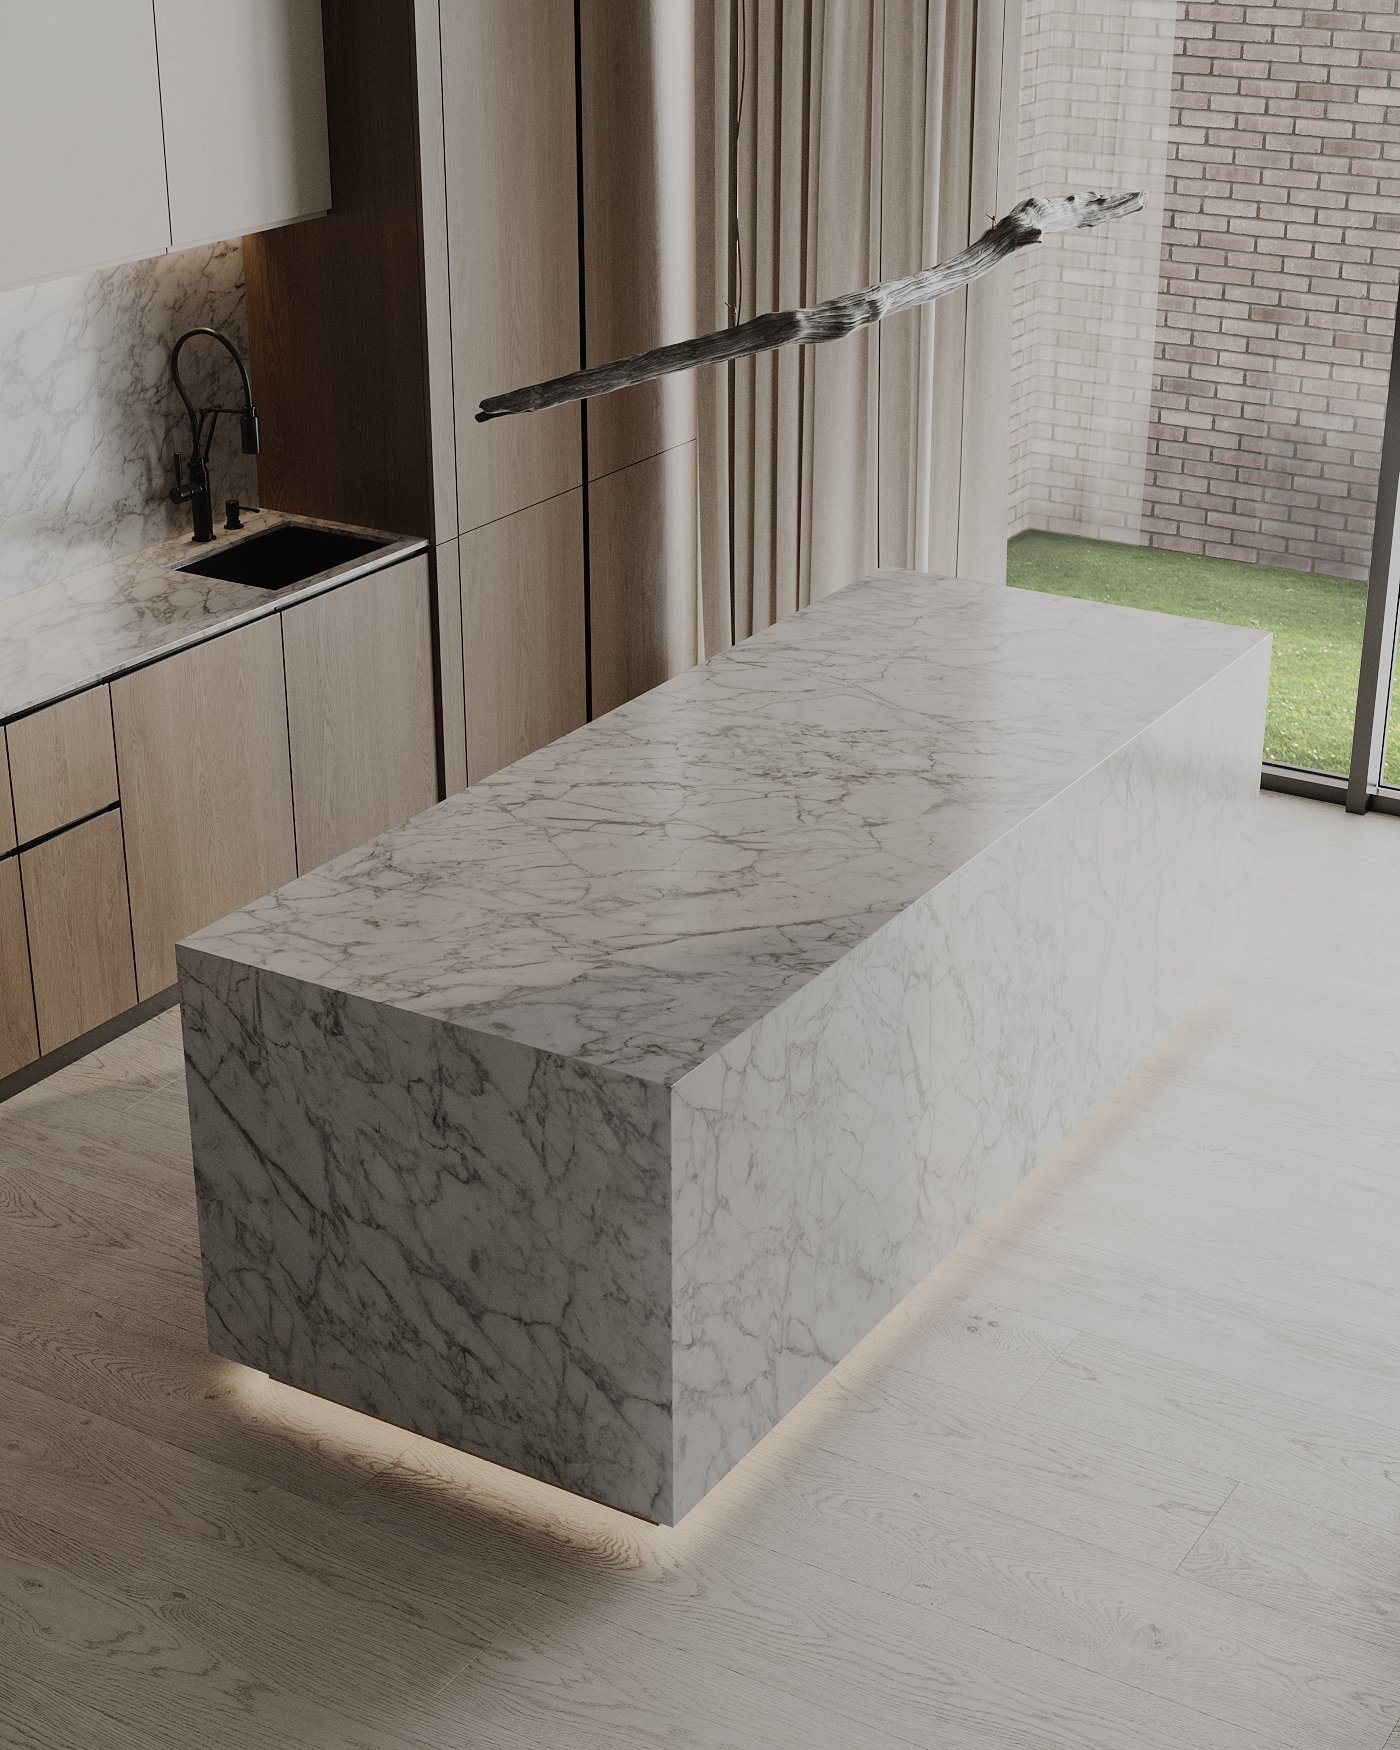 design interior design  Render architecture 3D 3ds max visualization house kitchen design living room